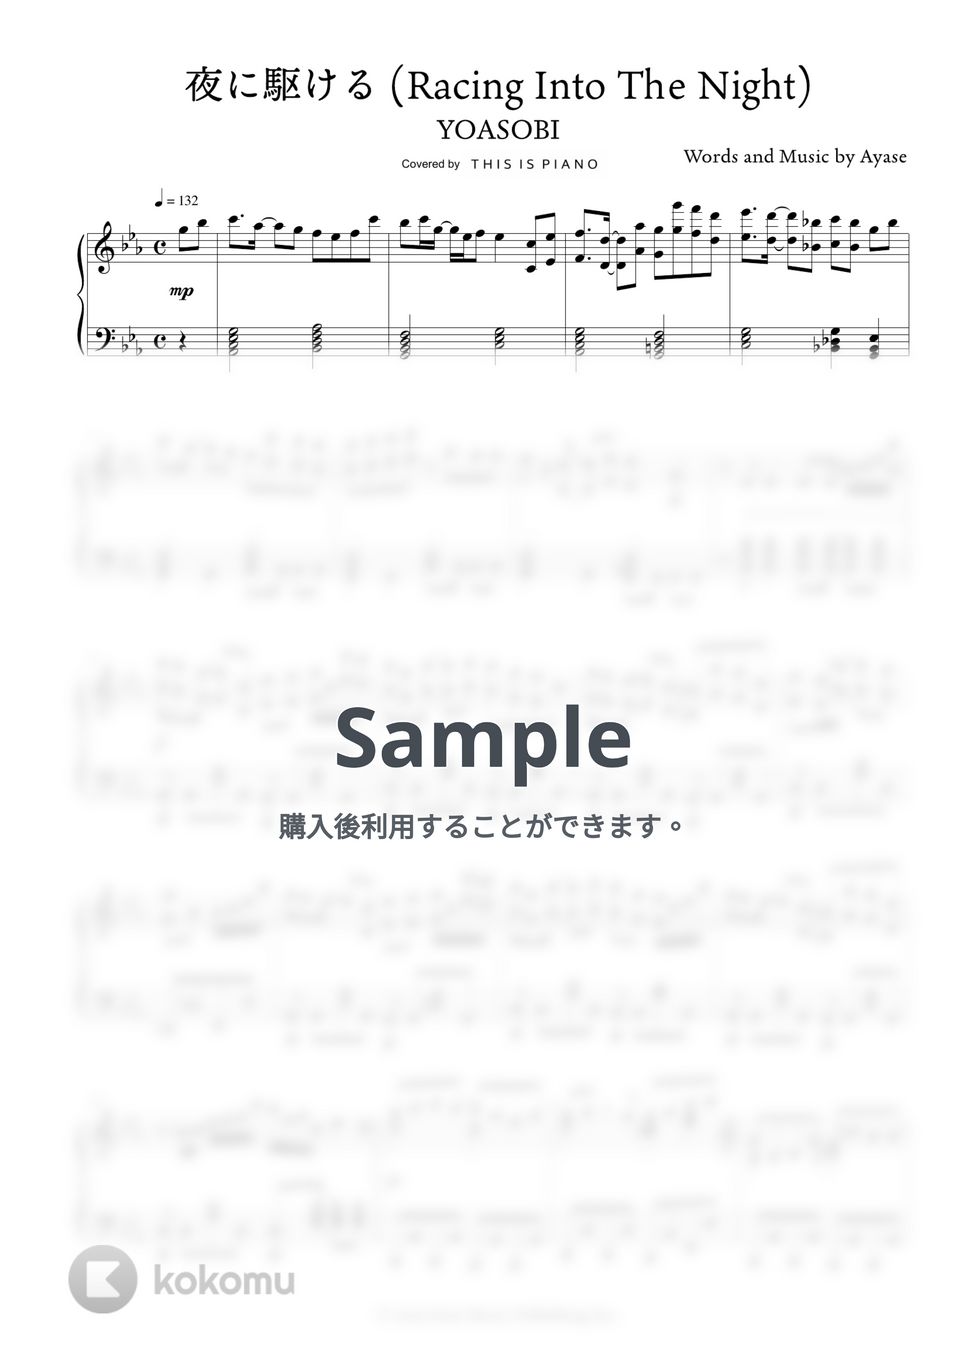 YOASOBI - 夜に駆ける by THIS IS PIANO